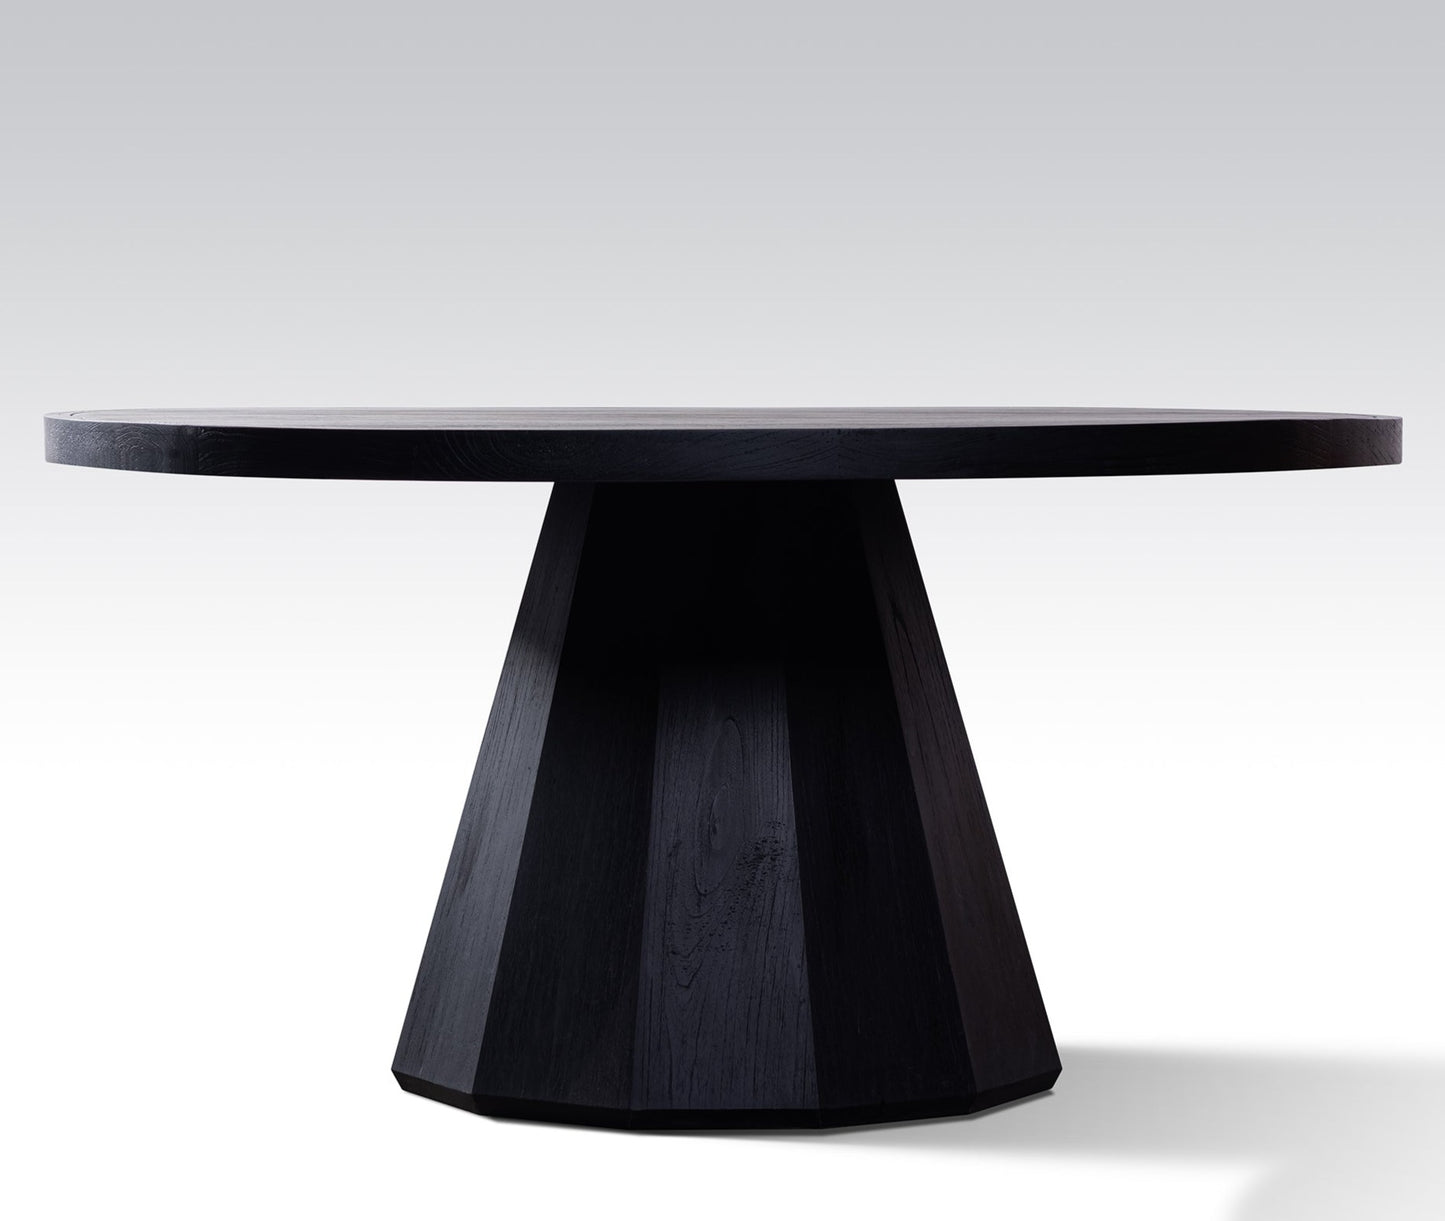 Prisma Round Solid Mindi Wood Dining Table Black (3 Sizes)